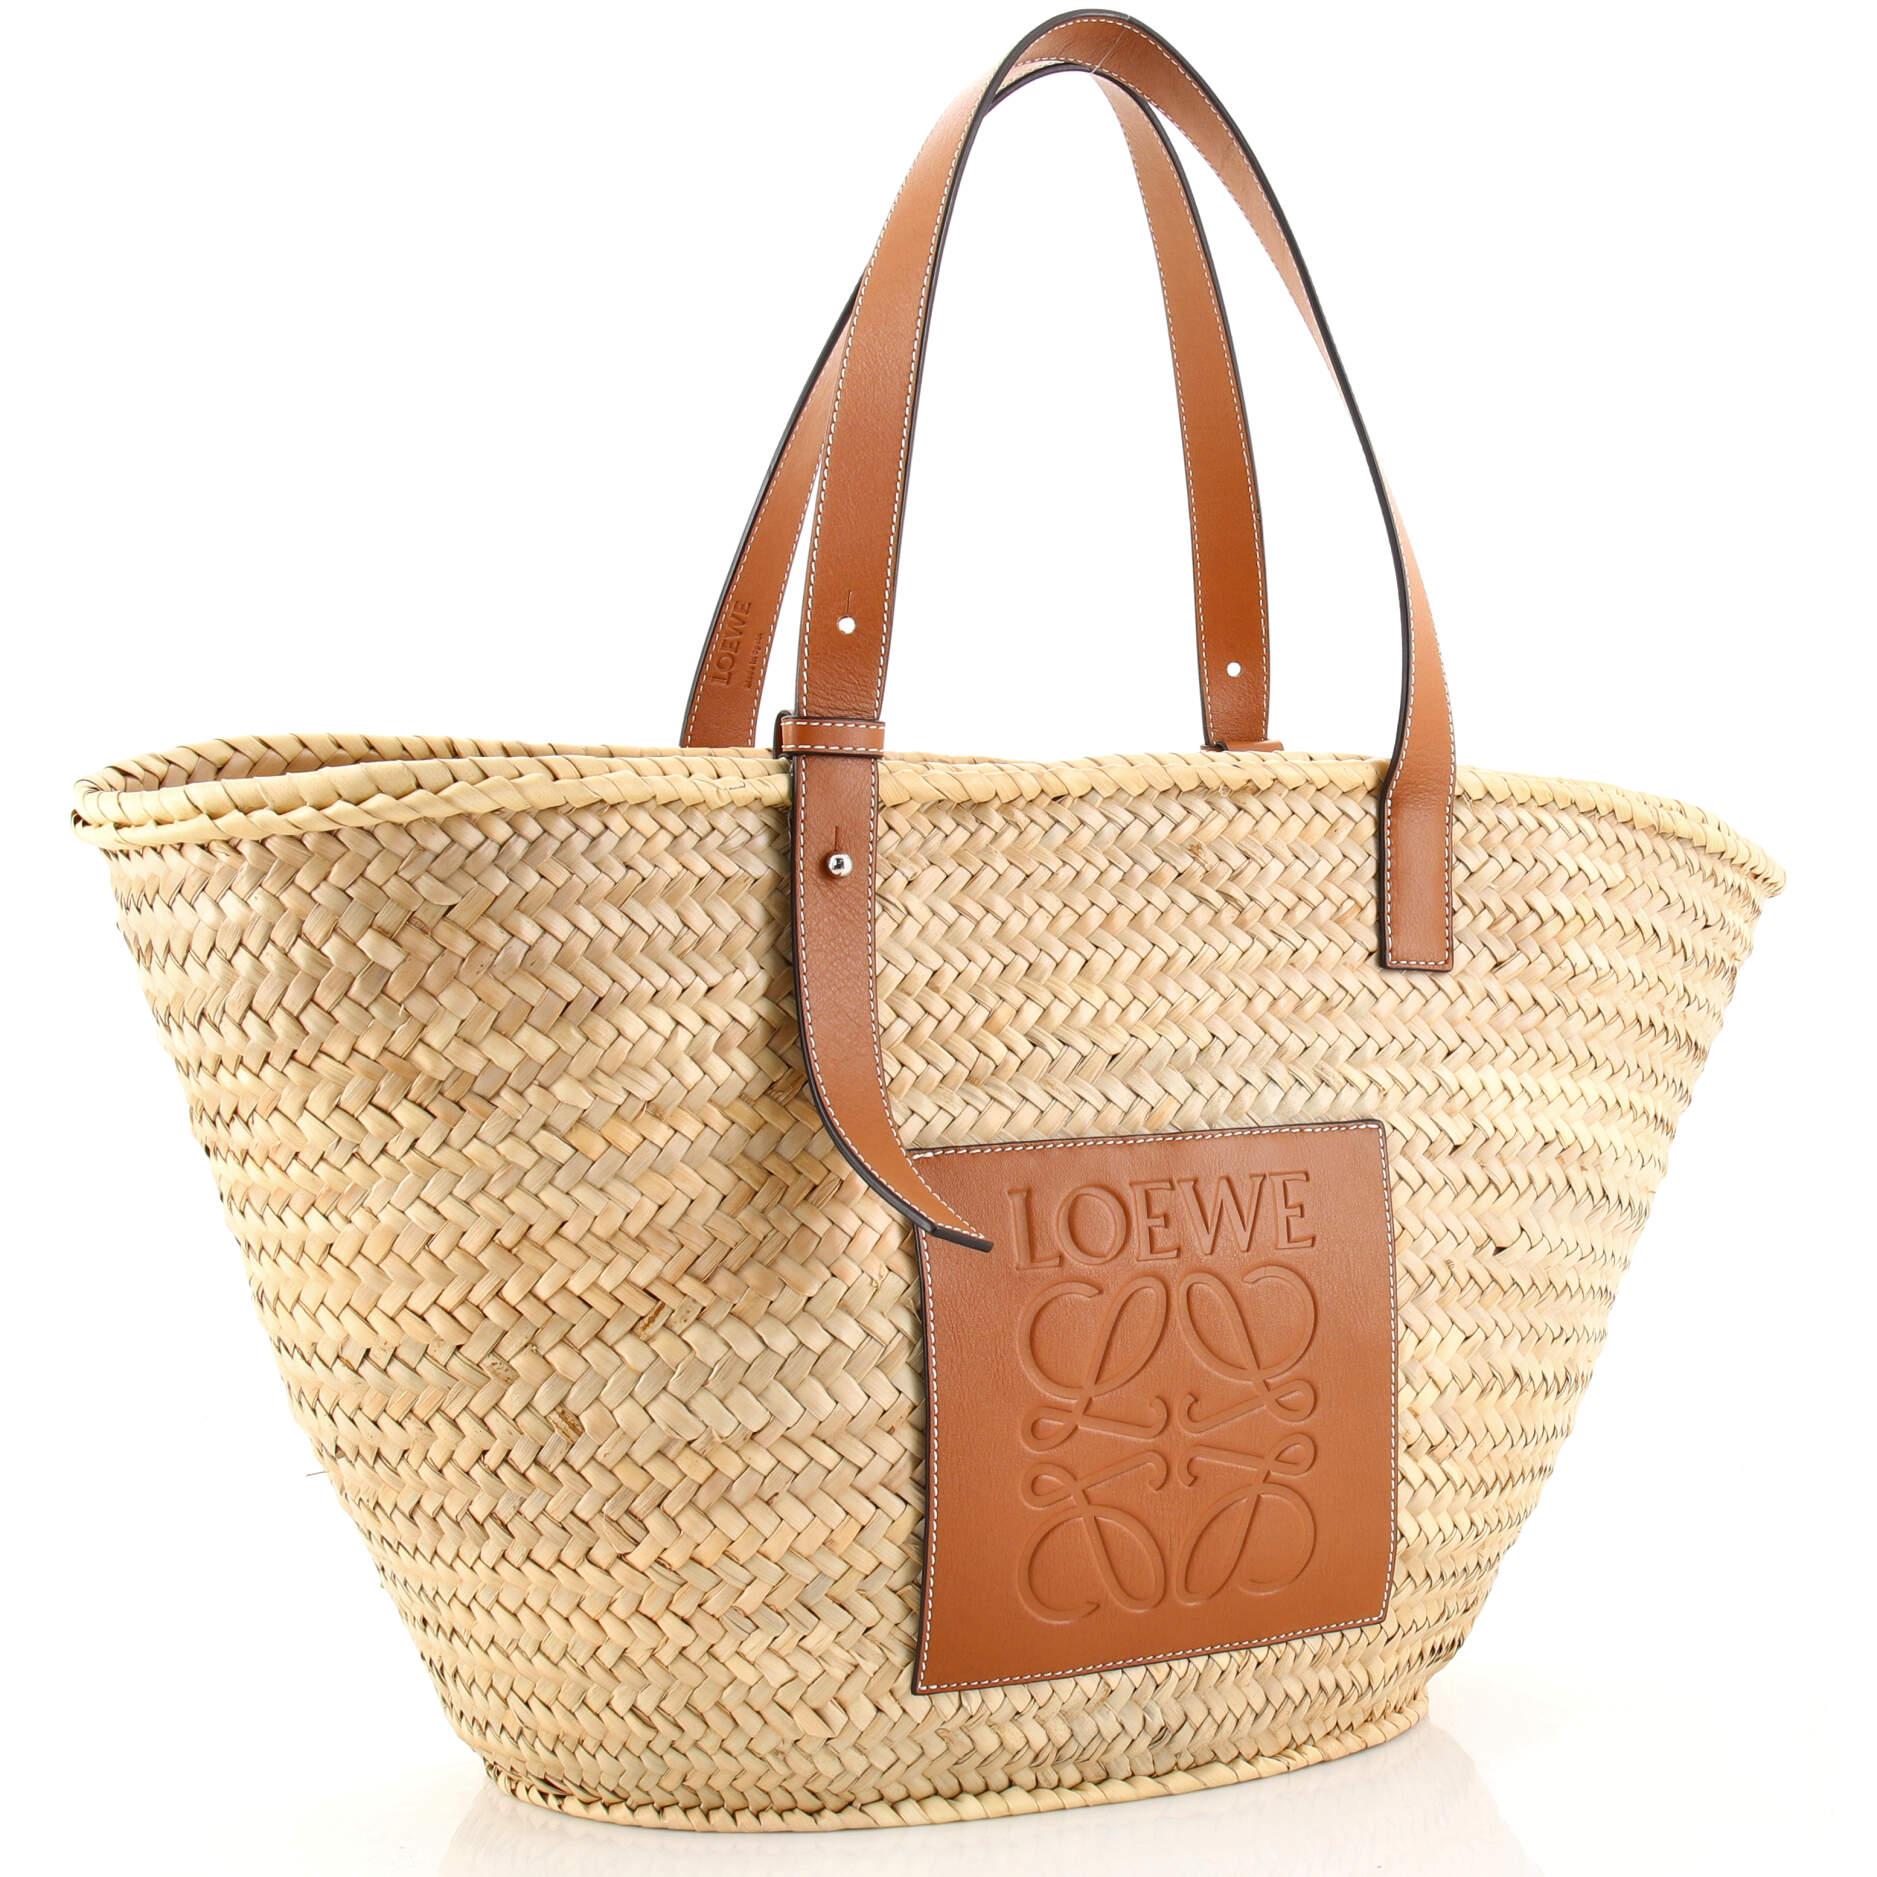 Beige Loewe Basket Bag Leather and Straw Large